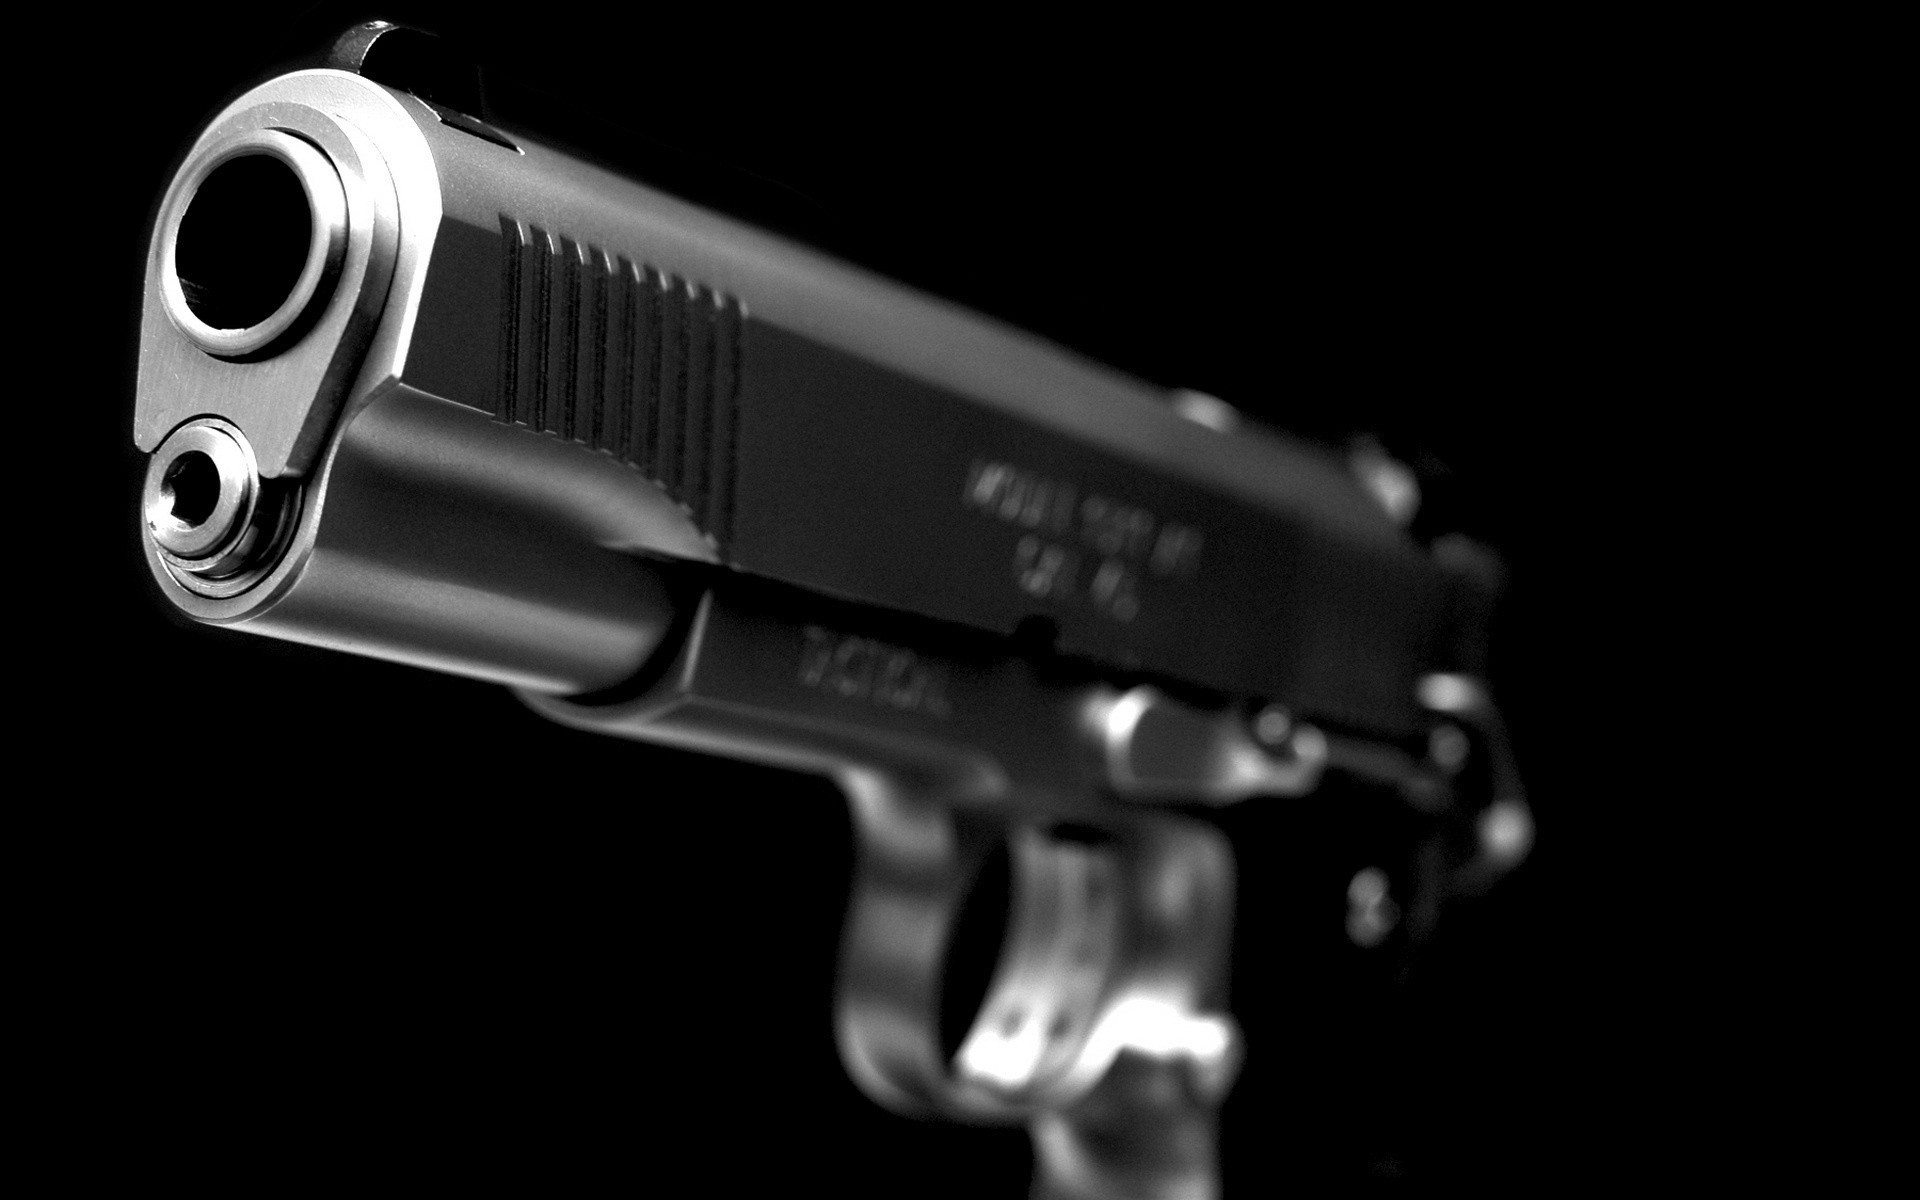 General 1920x1200 gun Colt 1911 pistol black background macro M1911 weapon closeup simple background American firearms